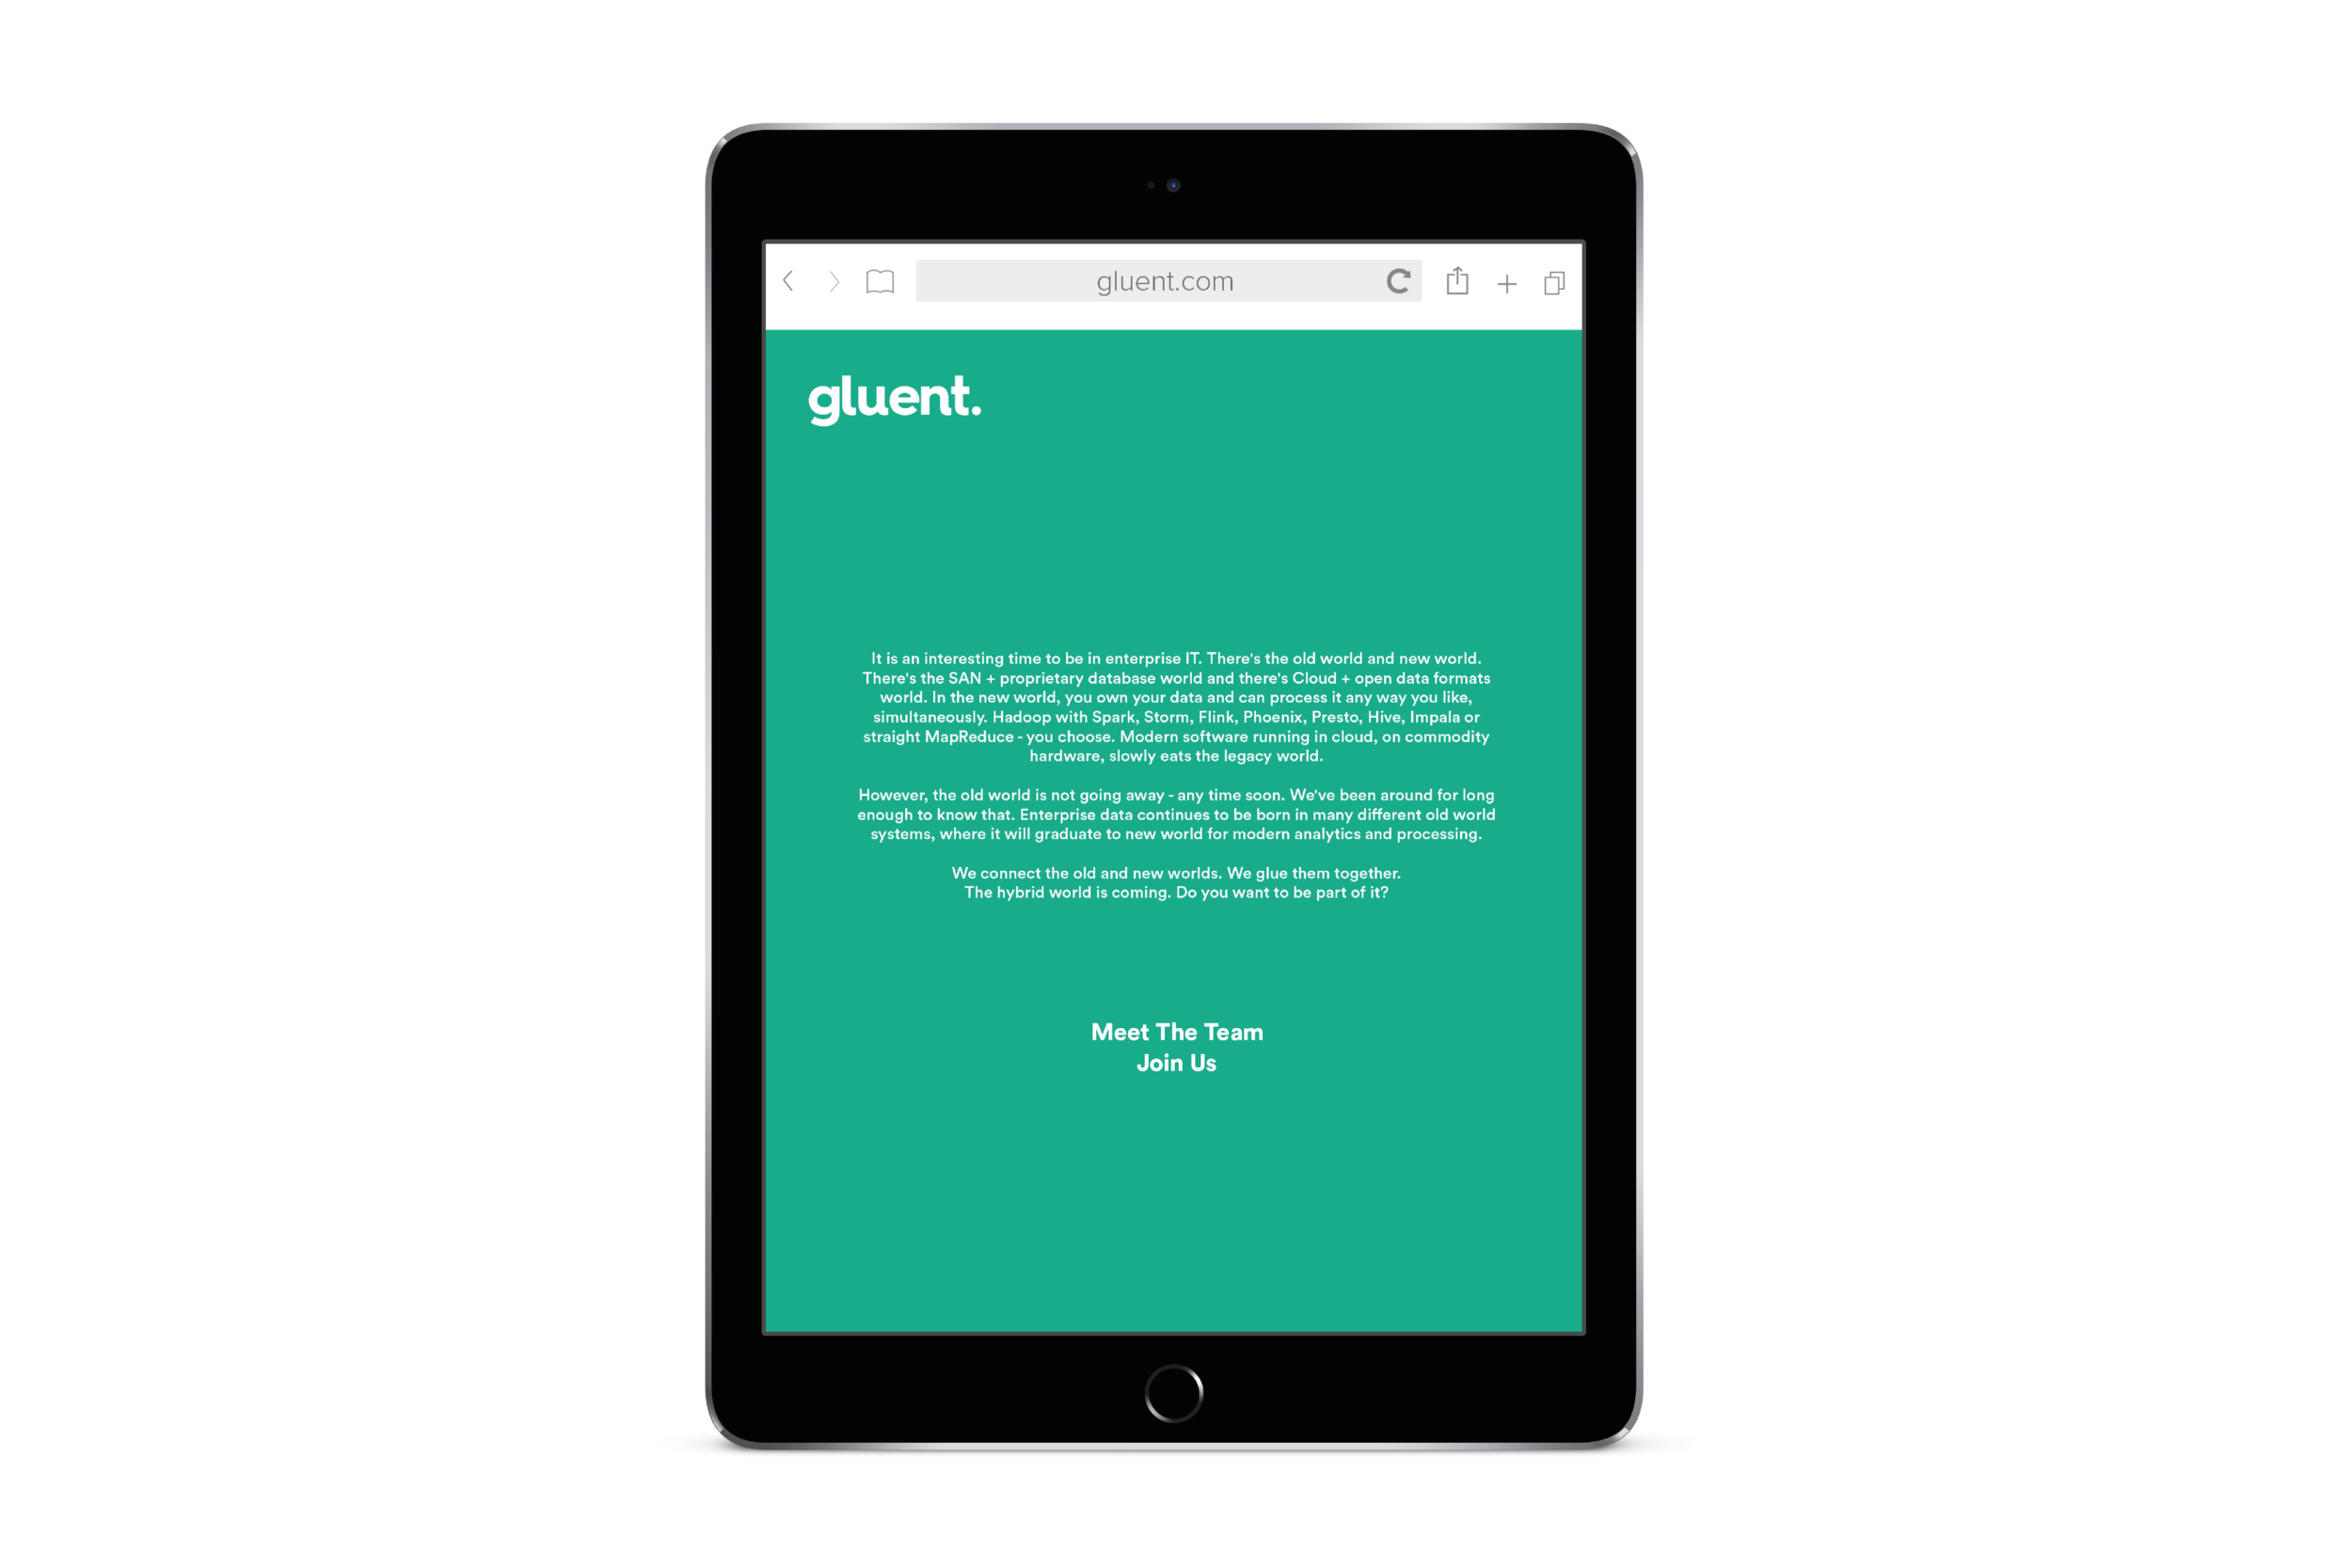 Branding consultant - An Apple iPad showing gluent website design